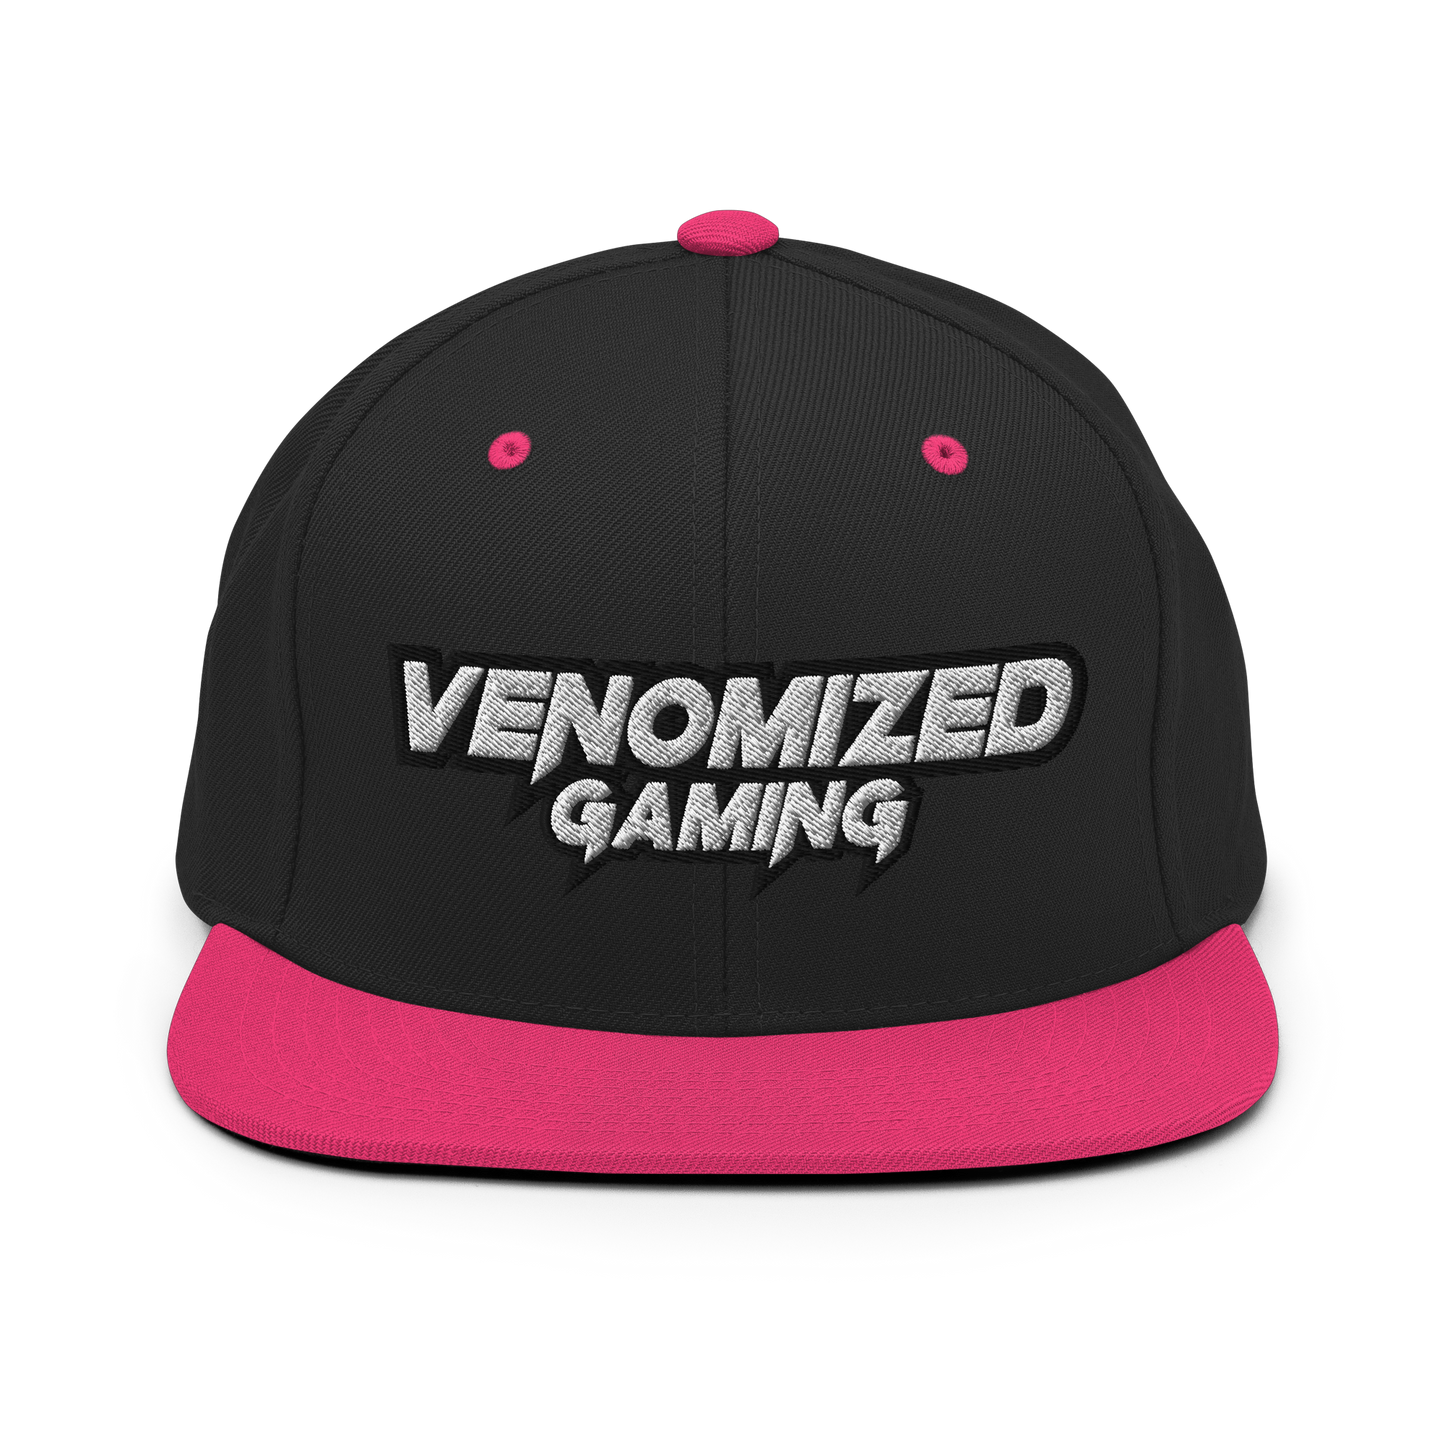 Venomized Gaming Snapback Hat